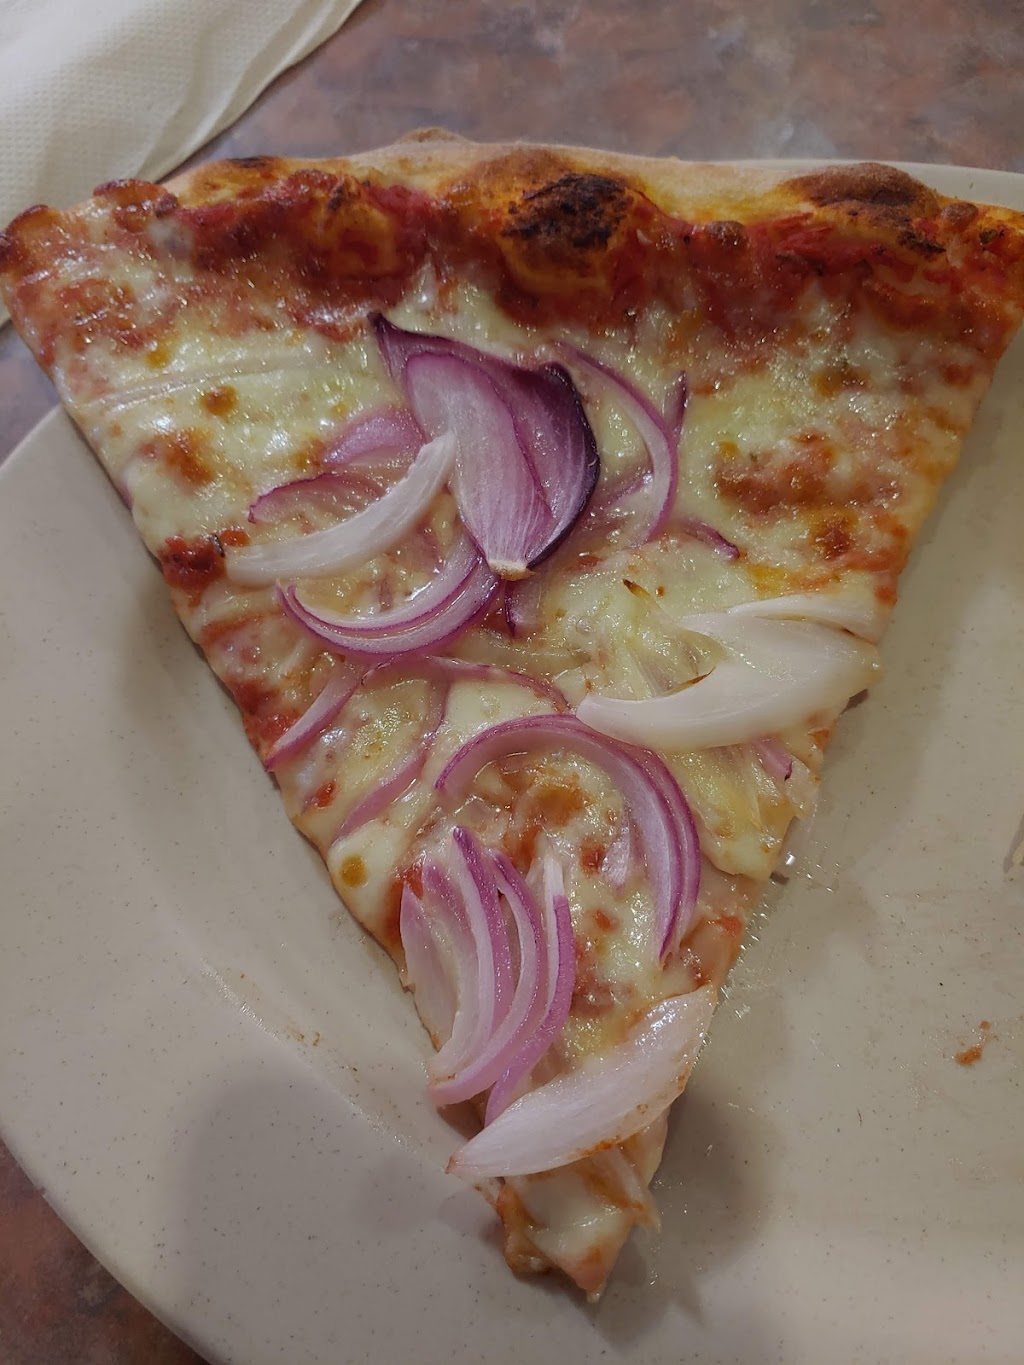 Franks Pizza and Italian restaurant | 152 NJ-94, Blairstown, NJ 07825 | Phone: (908) 362-1588